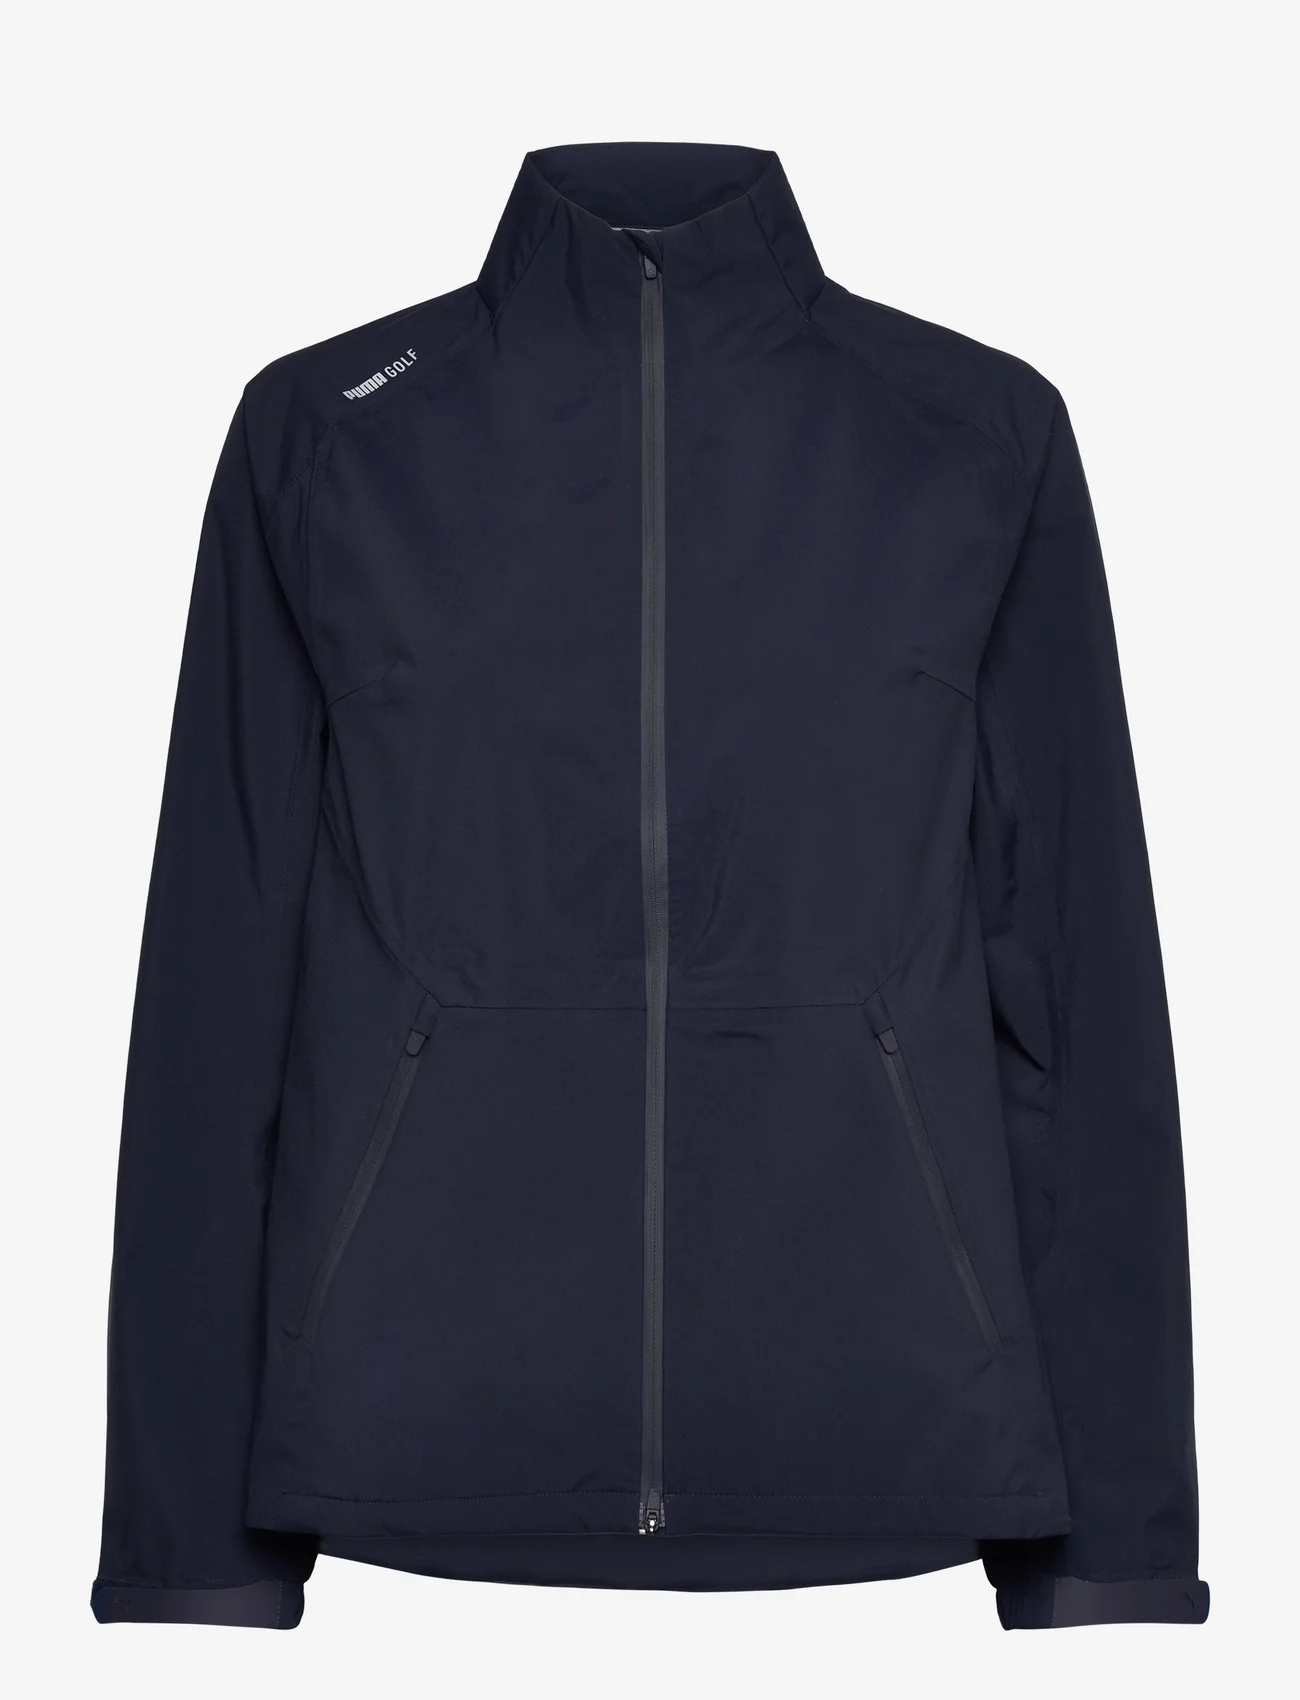 PUMA Golf - W DRYLBL Rain Jacket - rain coats - navy blazer - 0